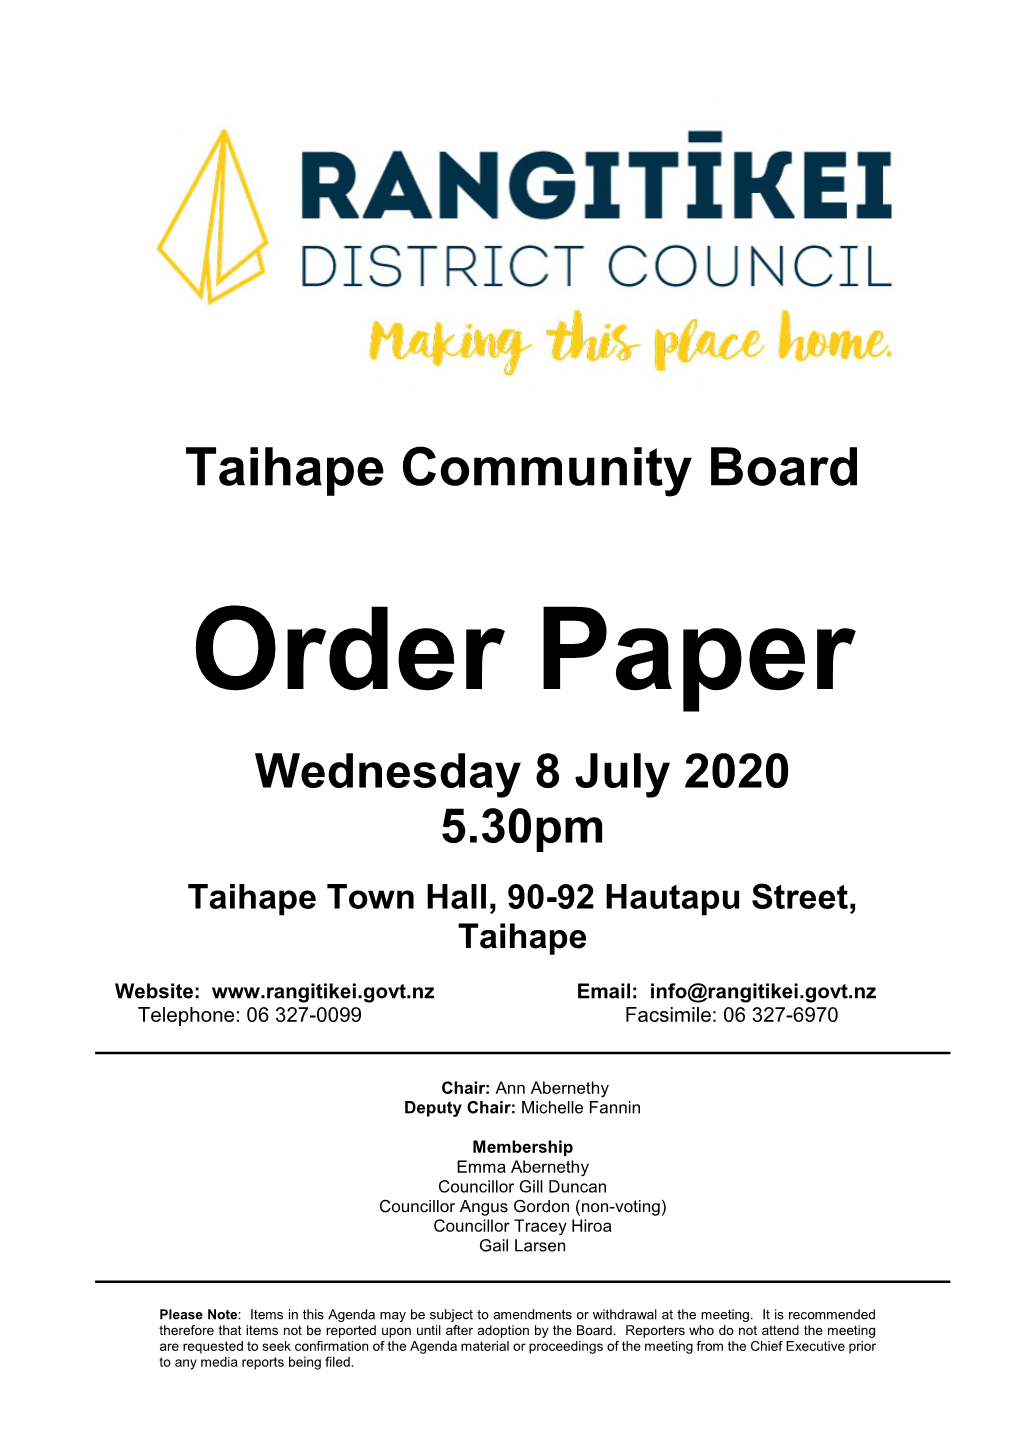 Order Paper Wednesday 8 July 2020 5.30Pm Taihape Town Hall, 90-92 Hautapu Street, Taihape